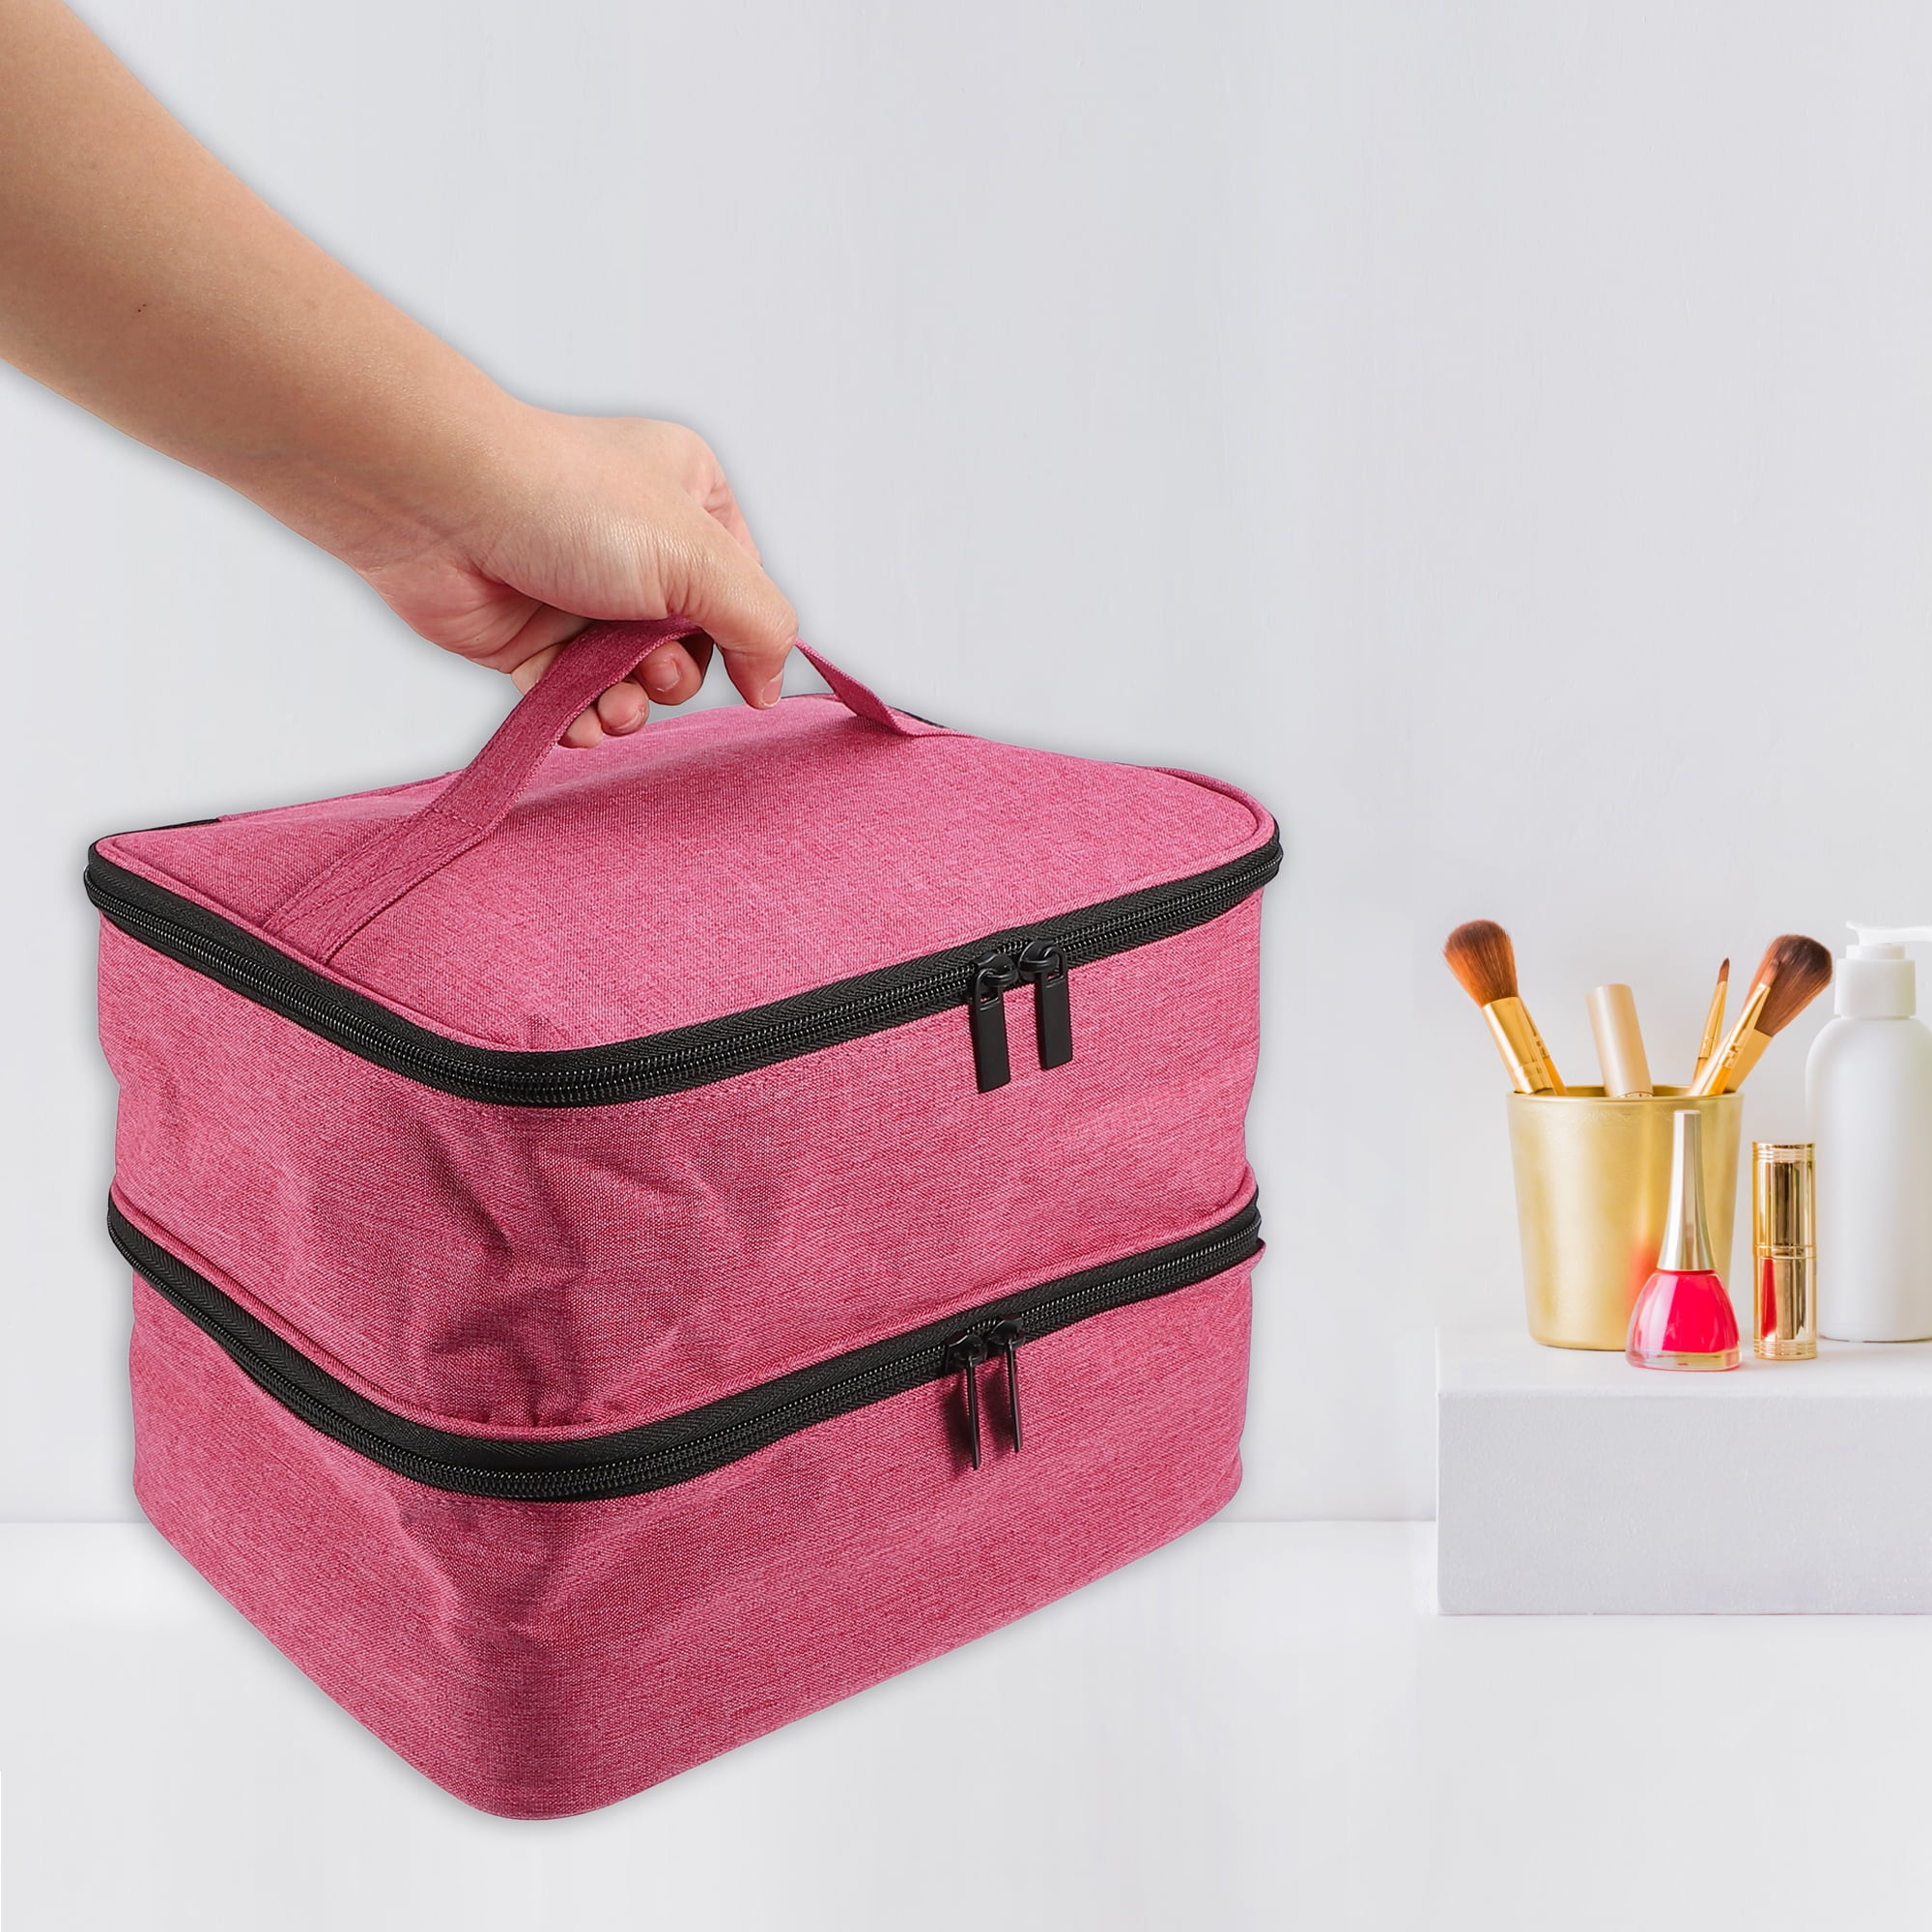 Unique Bargains Double Layer Nail Polish Organizer Case Nylon Pink, Size: 10.24 inchx8.27 inchx7.09 inch(Large*W*H)